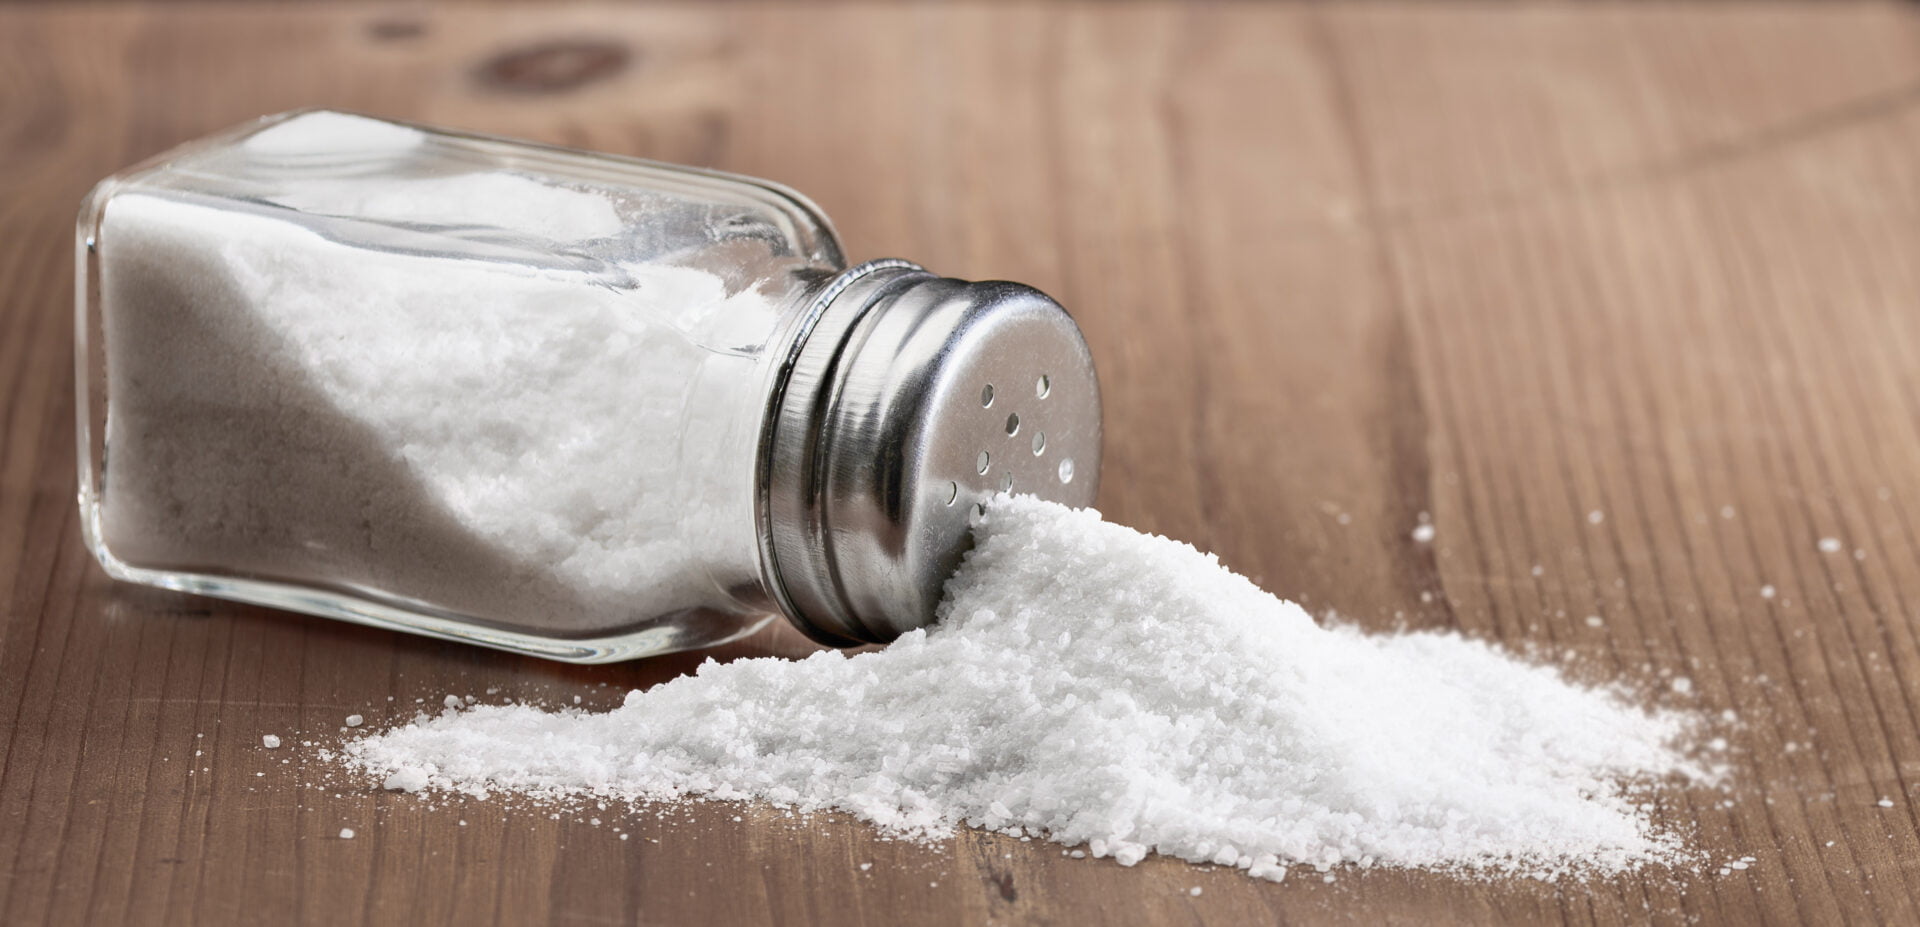 11 Amazing Things Happen When You Eat Pink Himalayan Salt